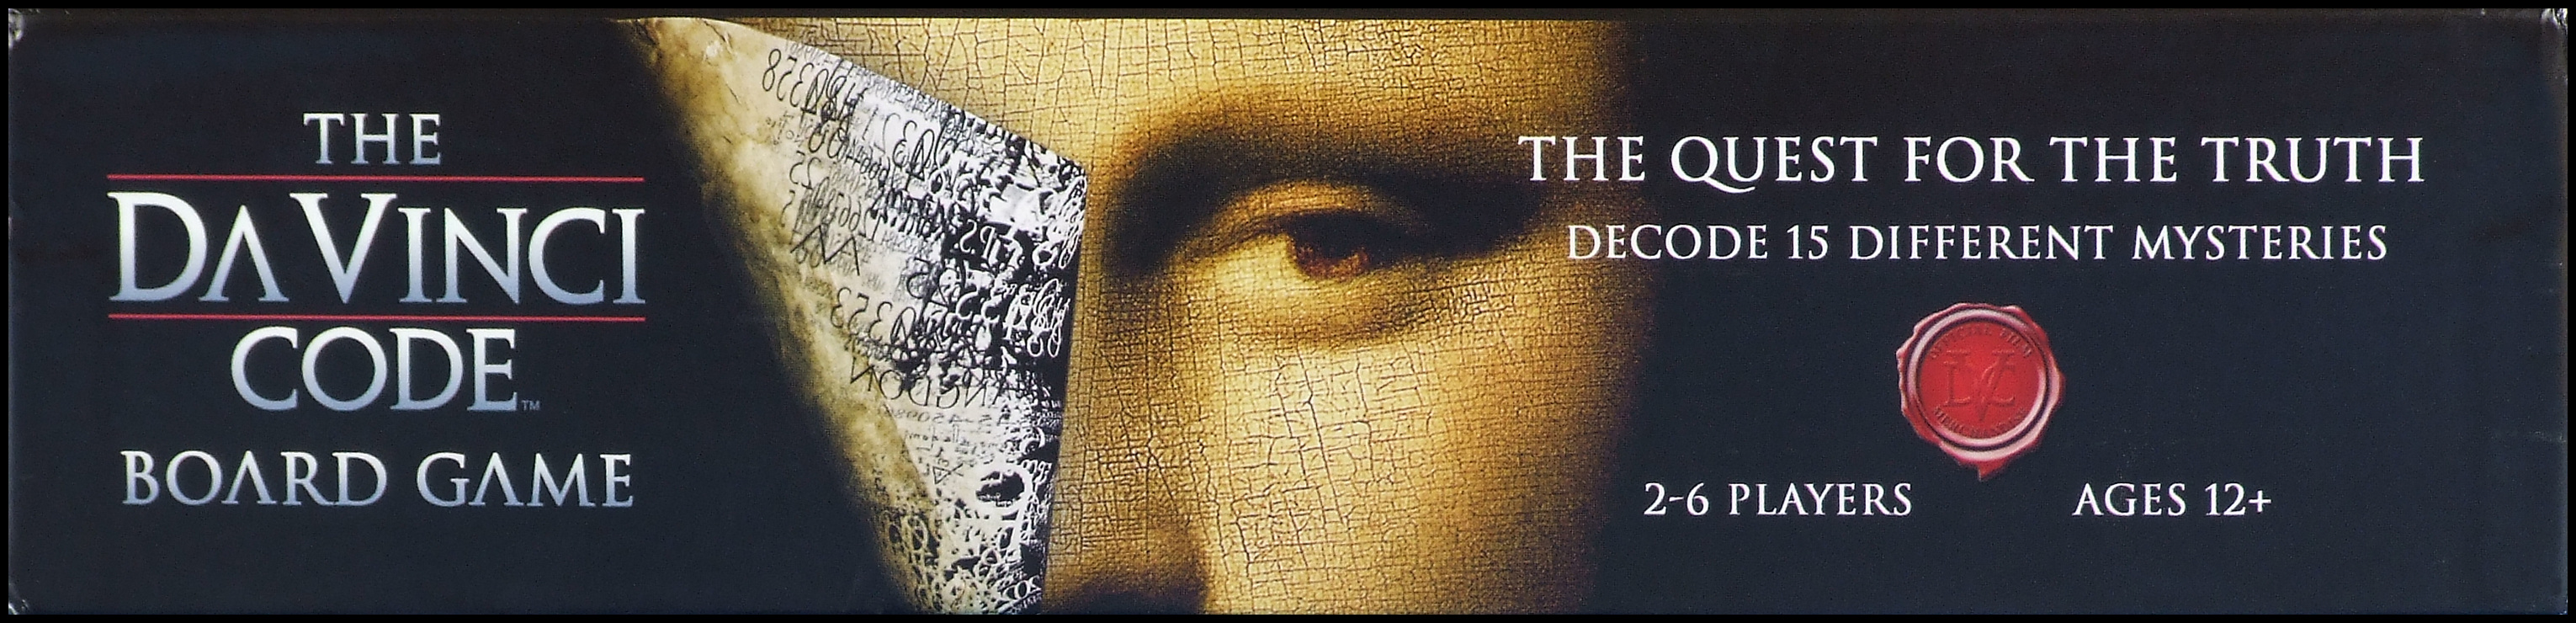 The Da Vinci Code - Box Side 1